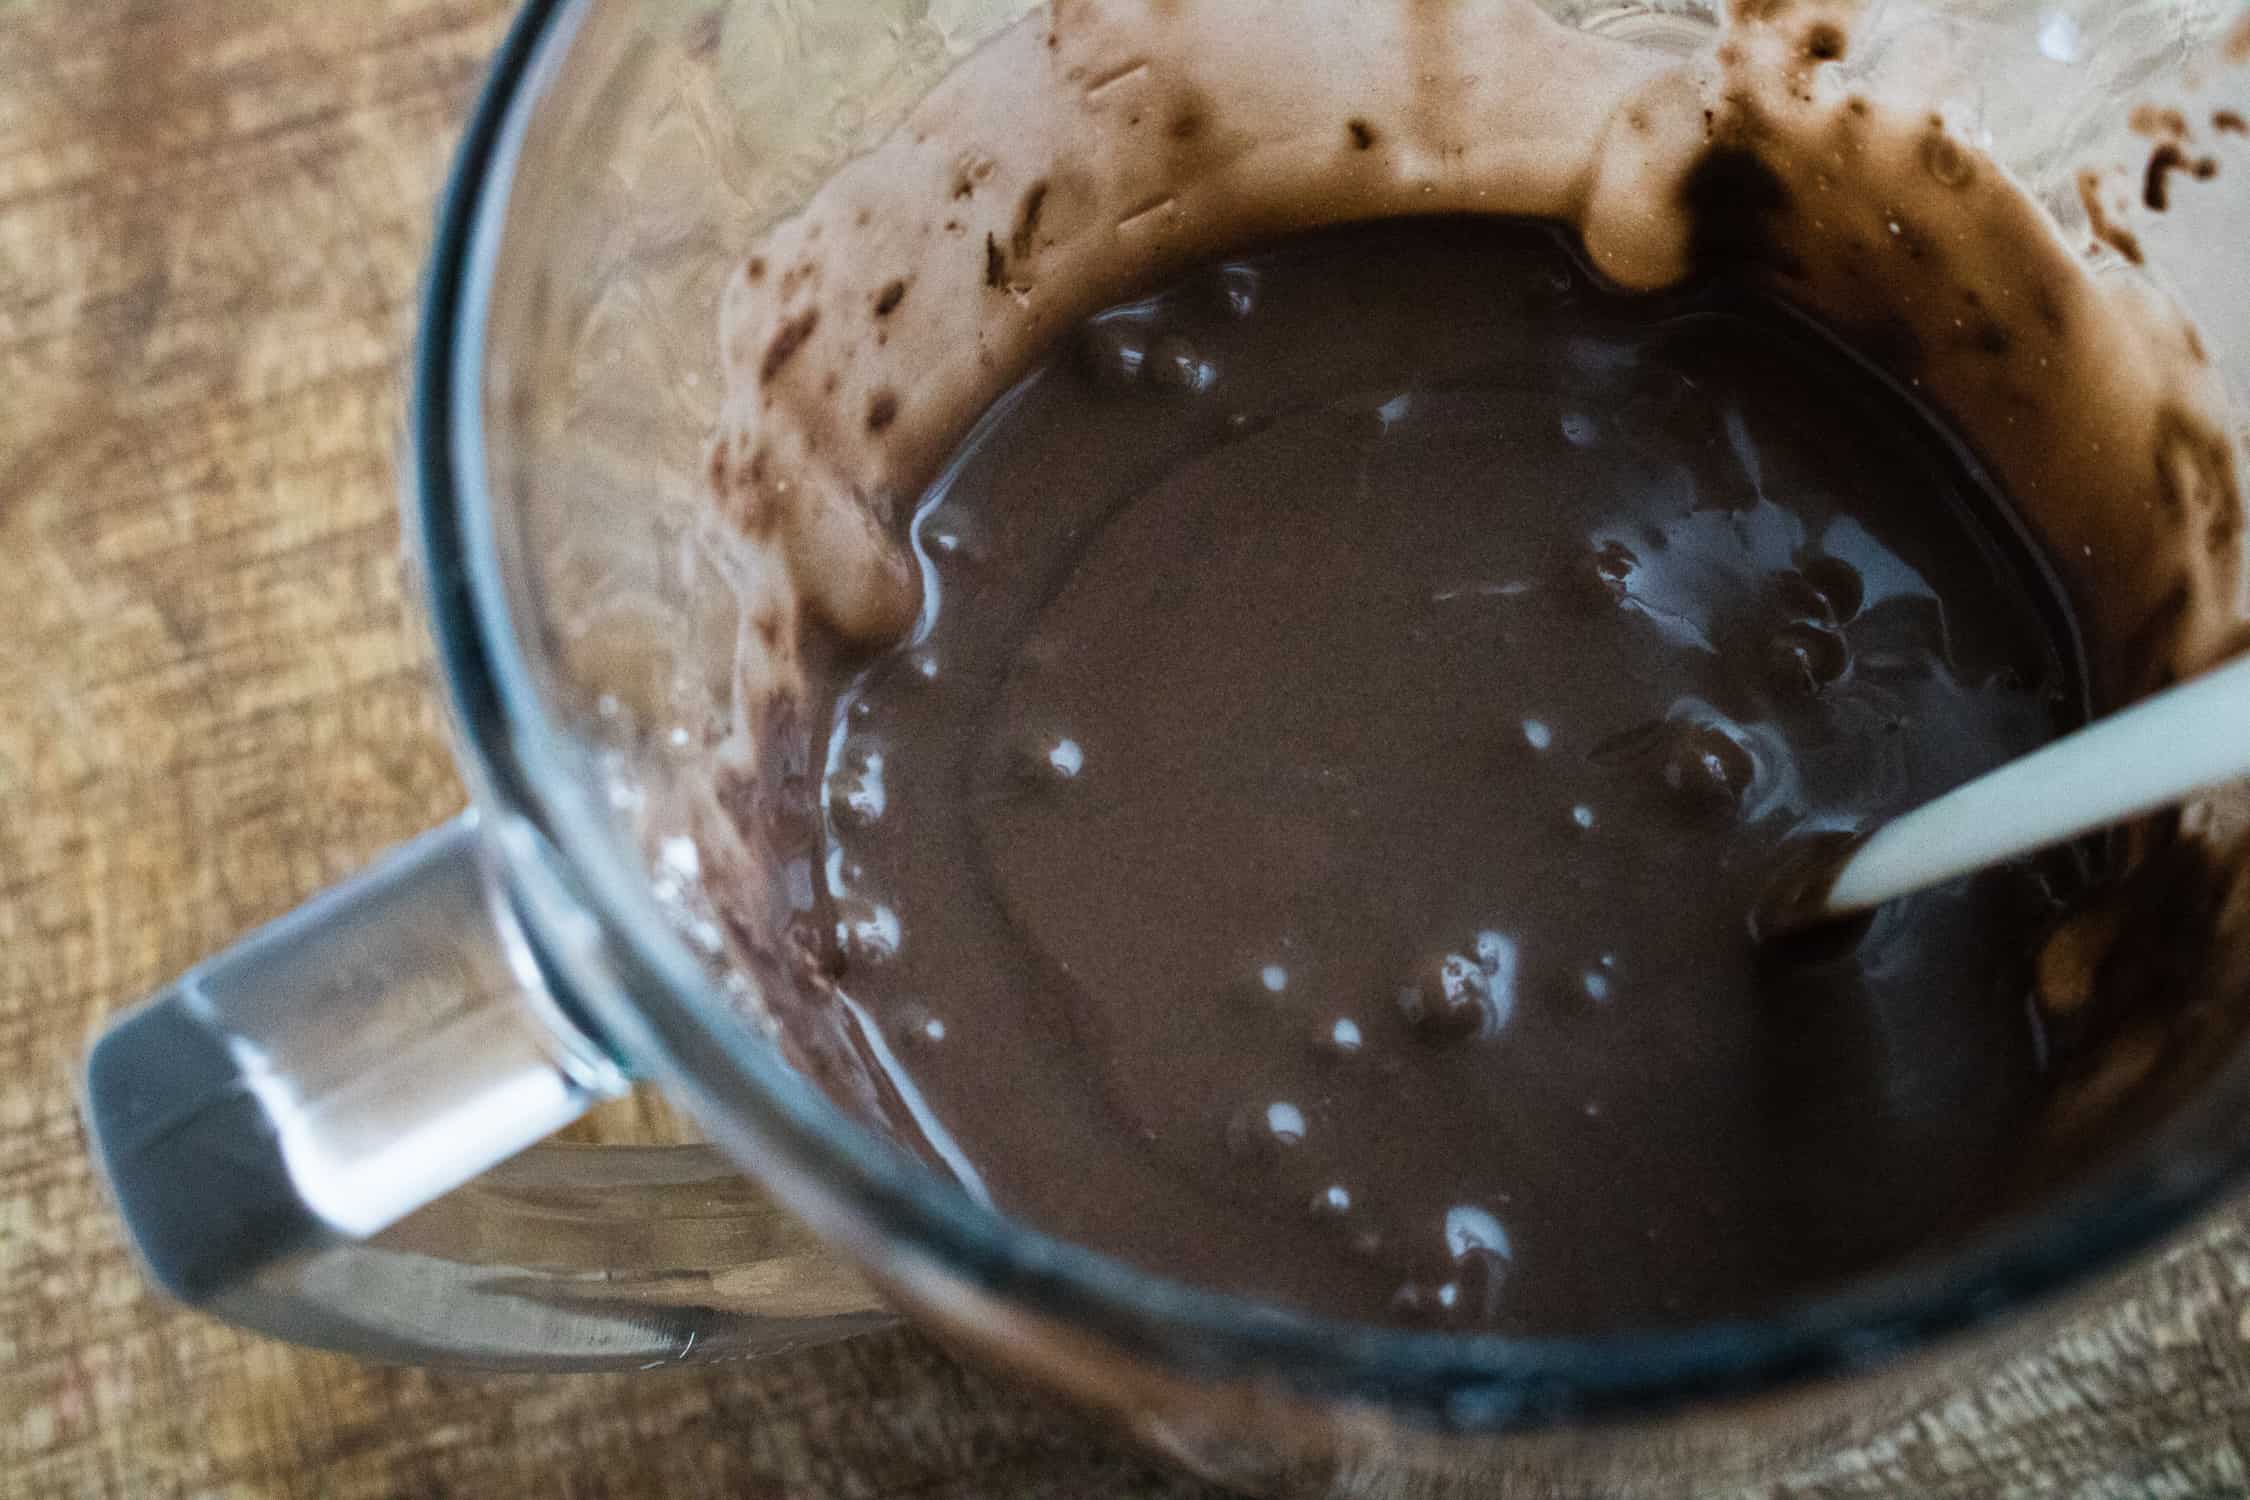 the ingredients for chocolate dessert crepes batter mixed together inside a blender